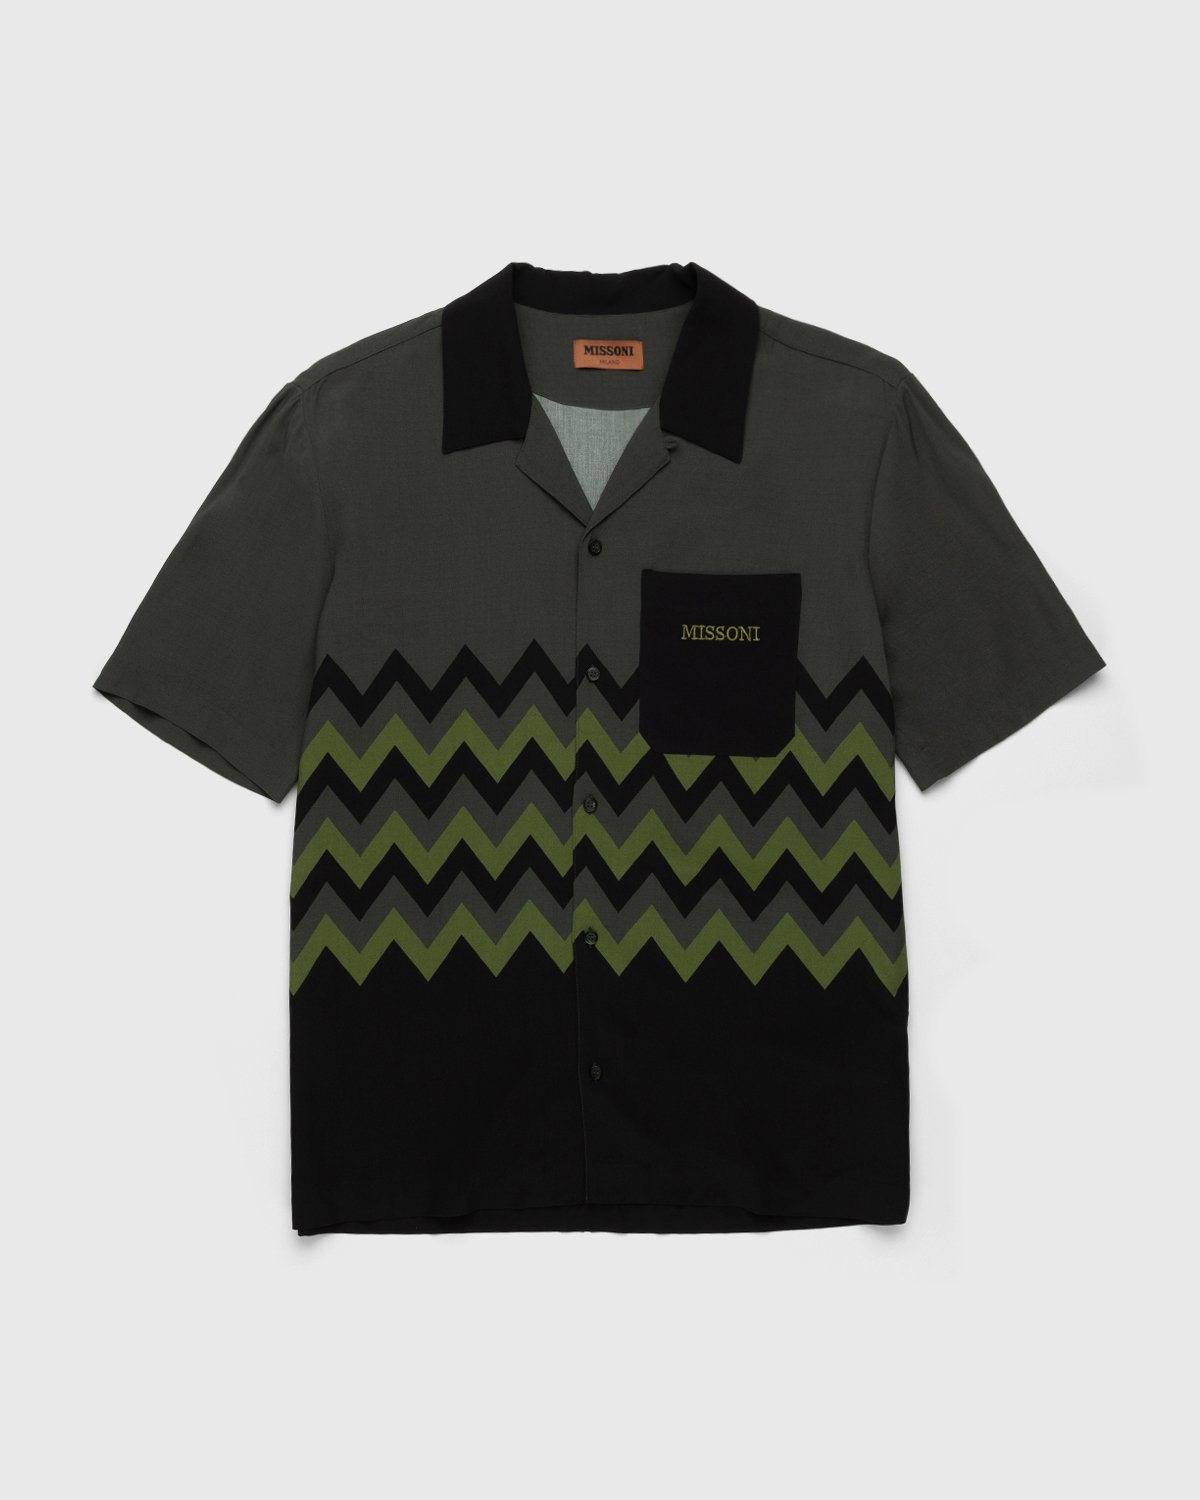 Missoni - Zig Zag Camp Shirt Green - Clothing - Multi - Image 1